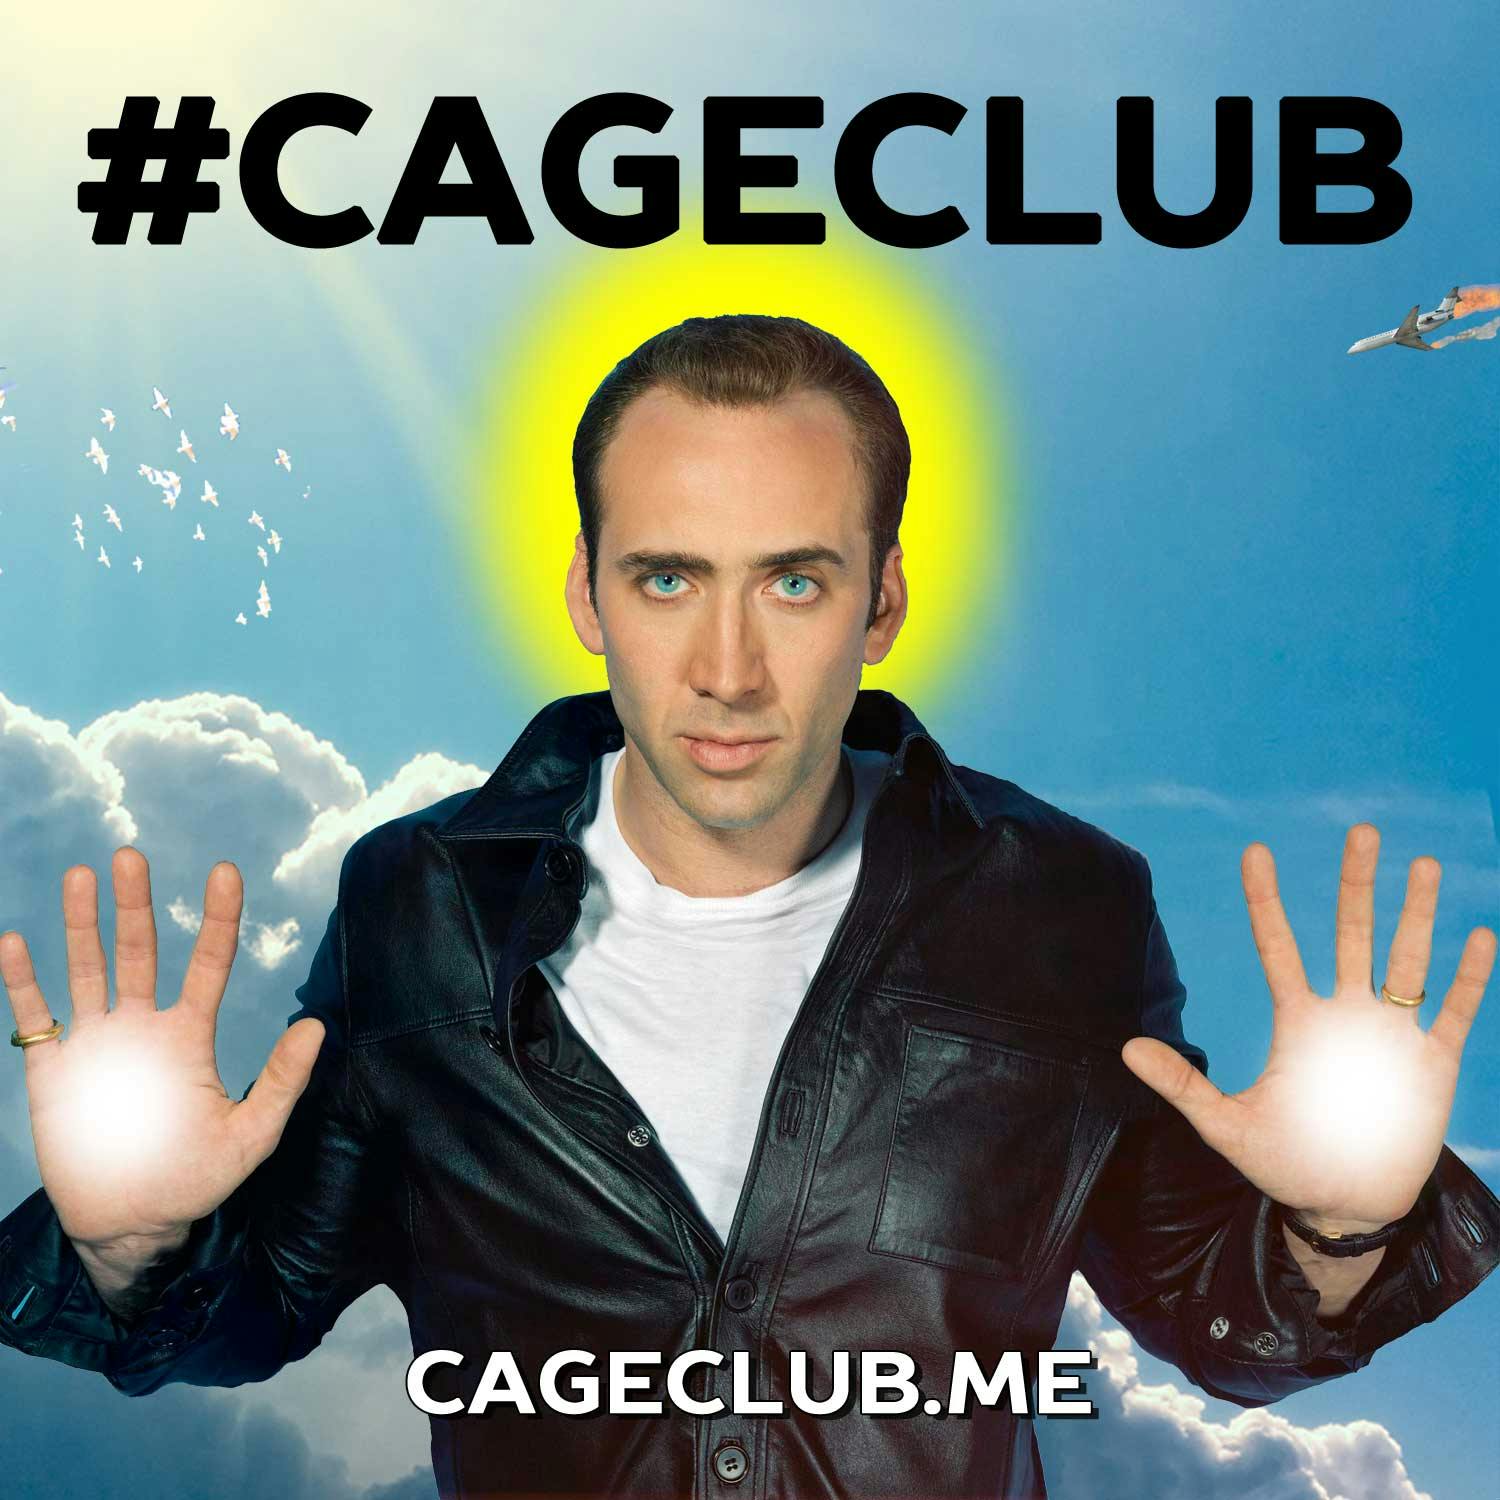 The #CageClub Awards